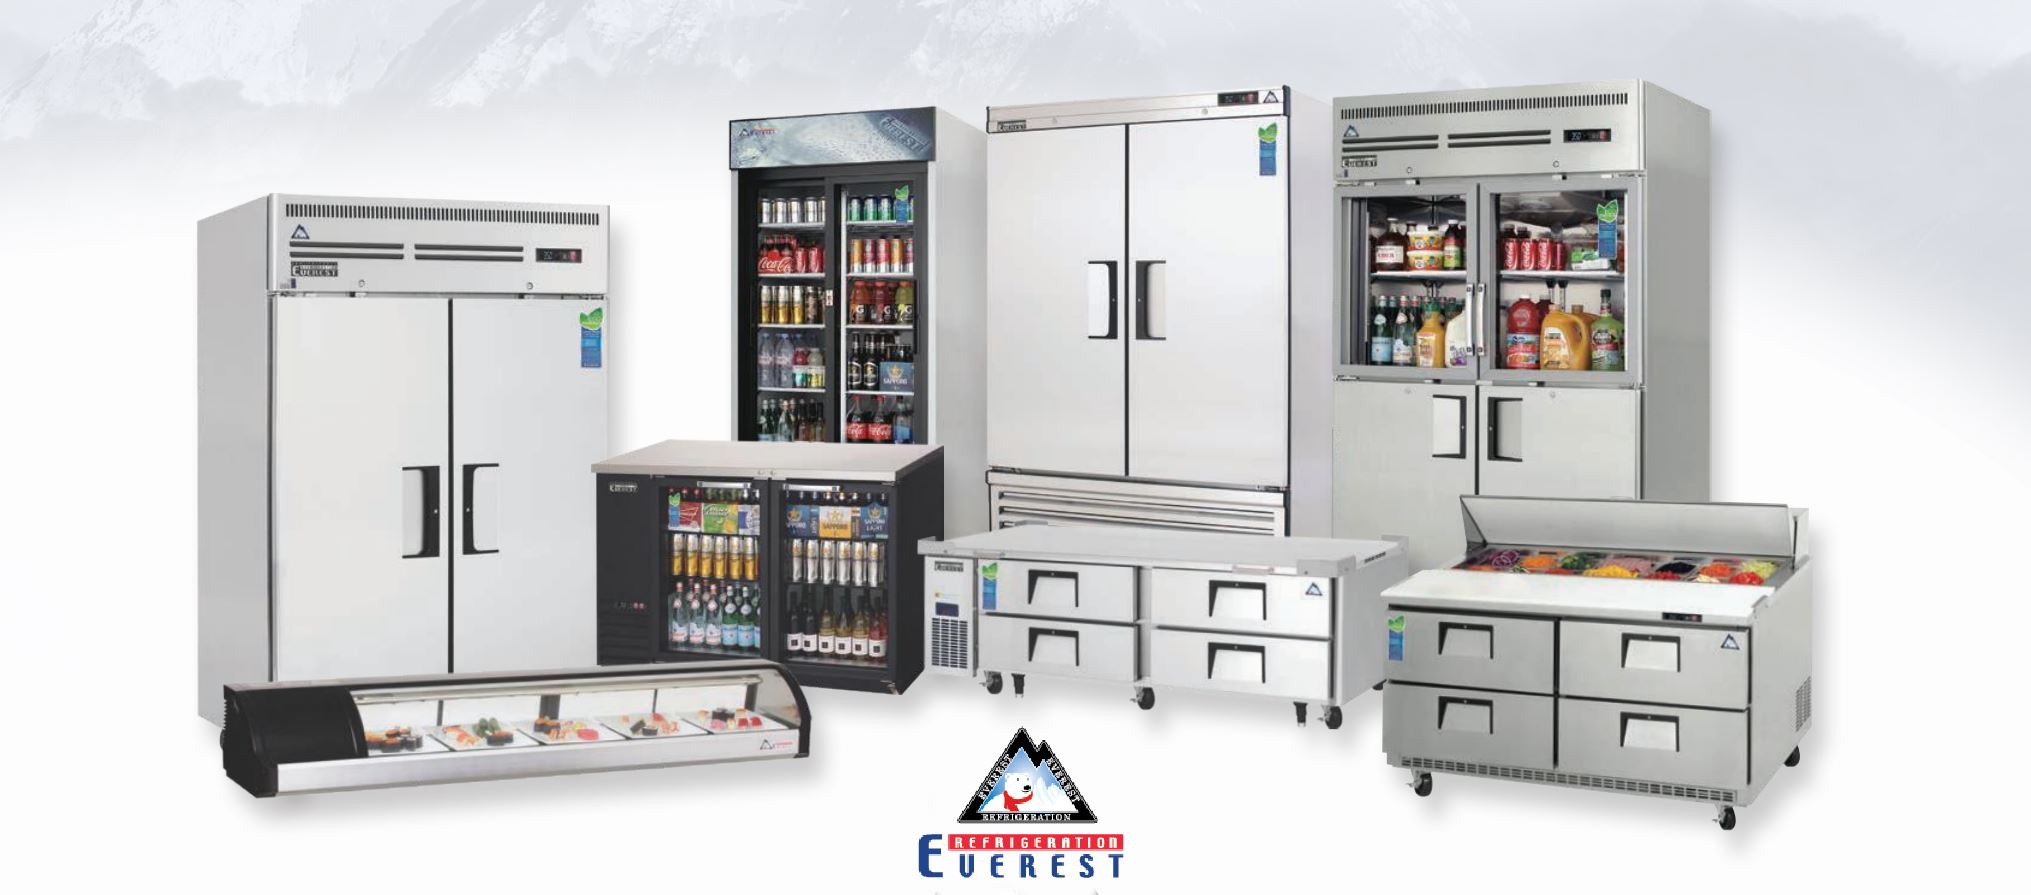 Everest refrigeration now of KCL foodservice design software